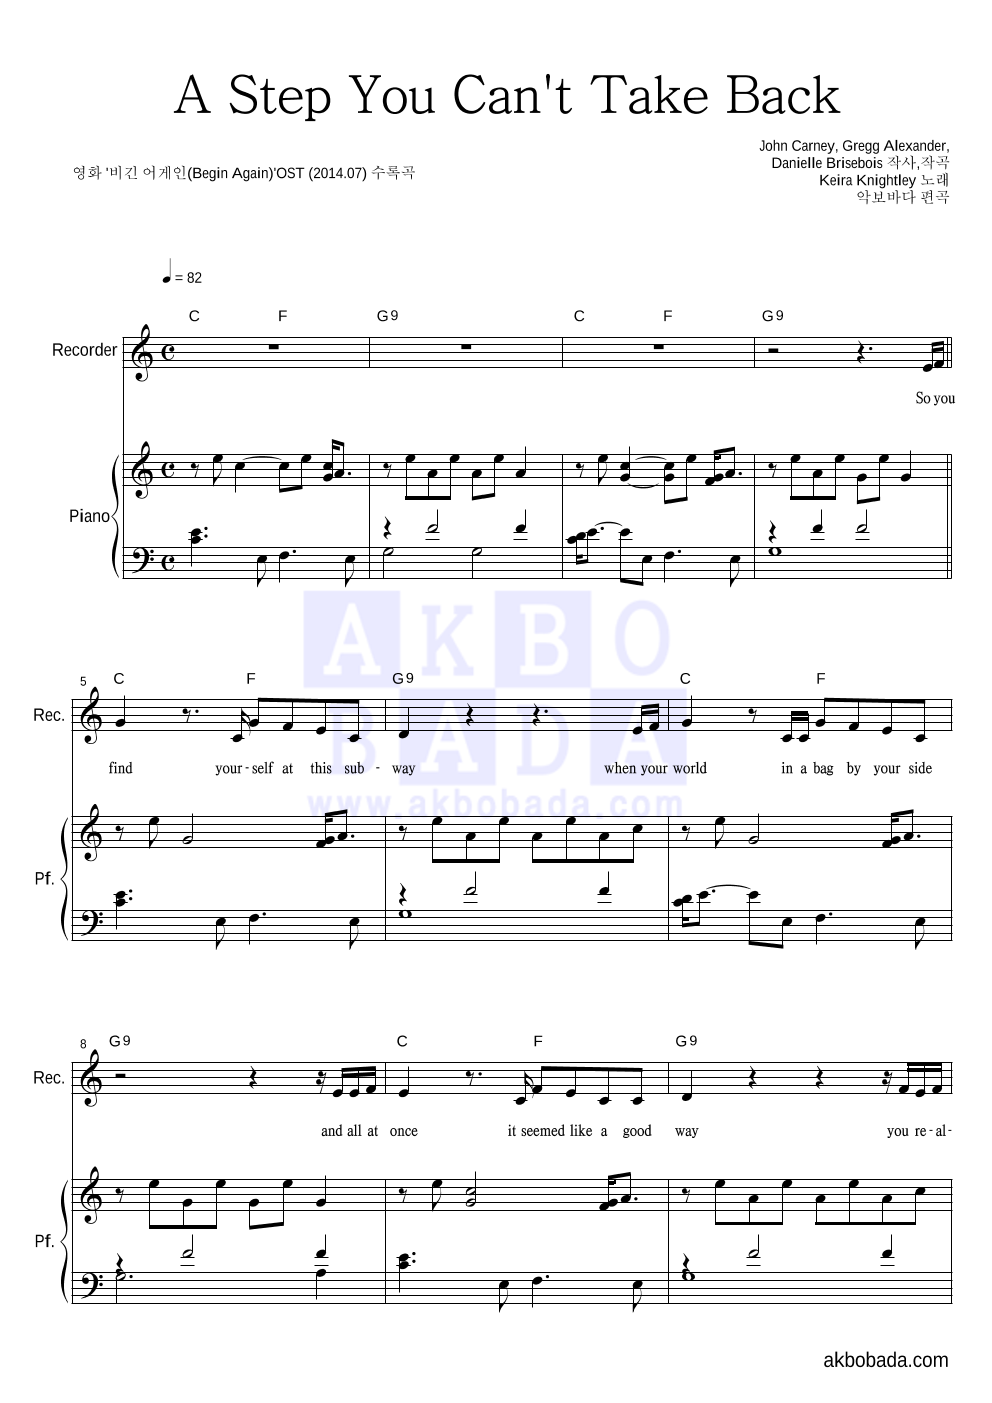 Keira Knightley - A Step You Can't Take Back 리코더&피아노 악보 